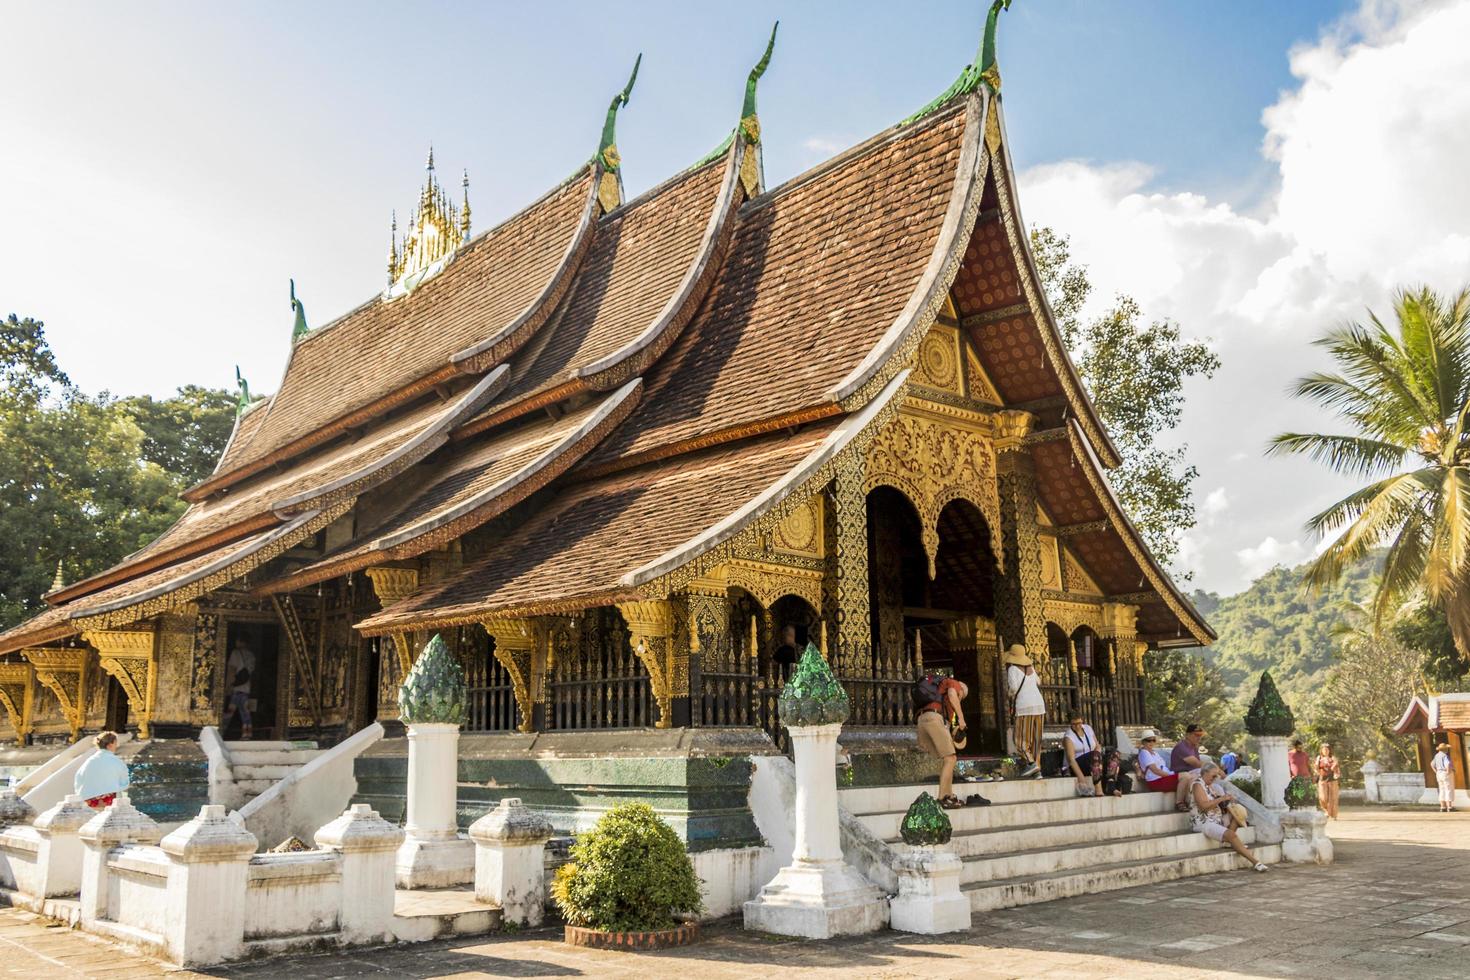 luang prabang, laos 2018- wat xieng thong temple in luang prabang, laos foto